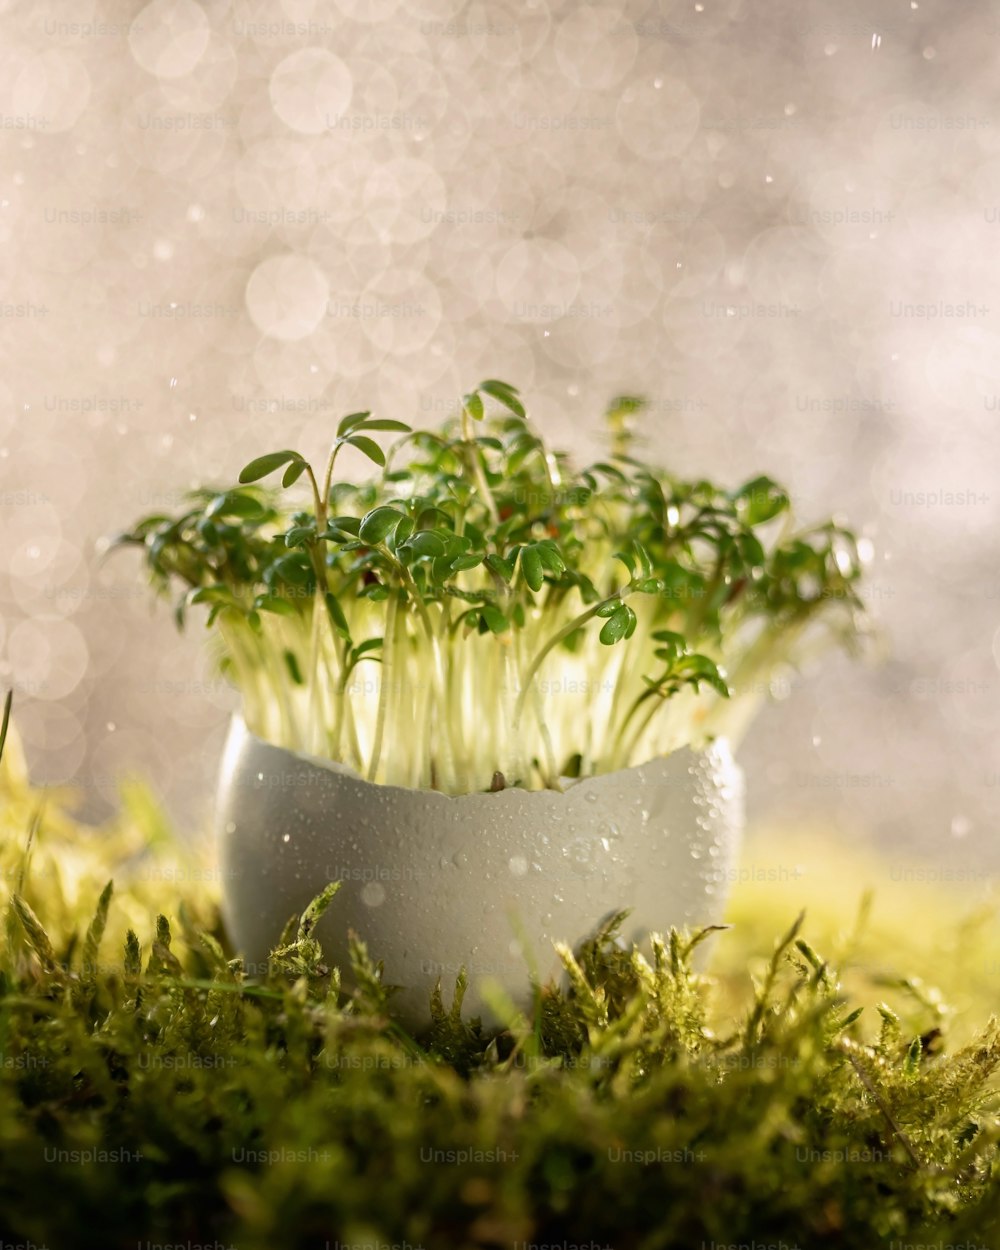 Microgreens de berros de jardín frescos que crecen a partir de una cáscara de huevo